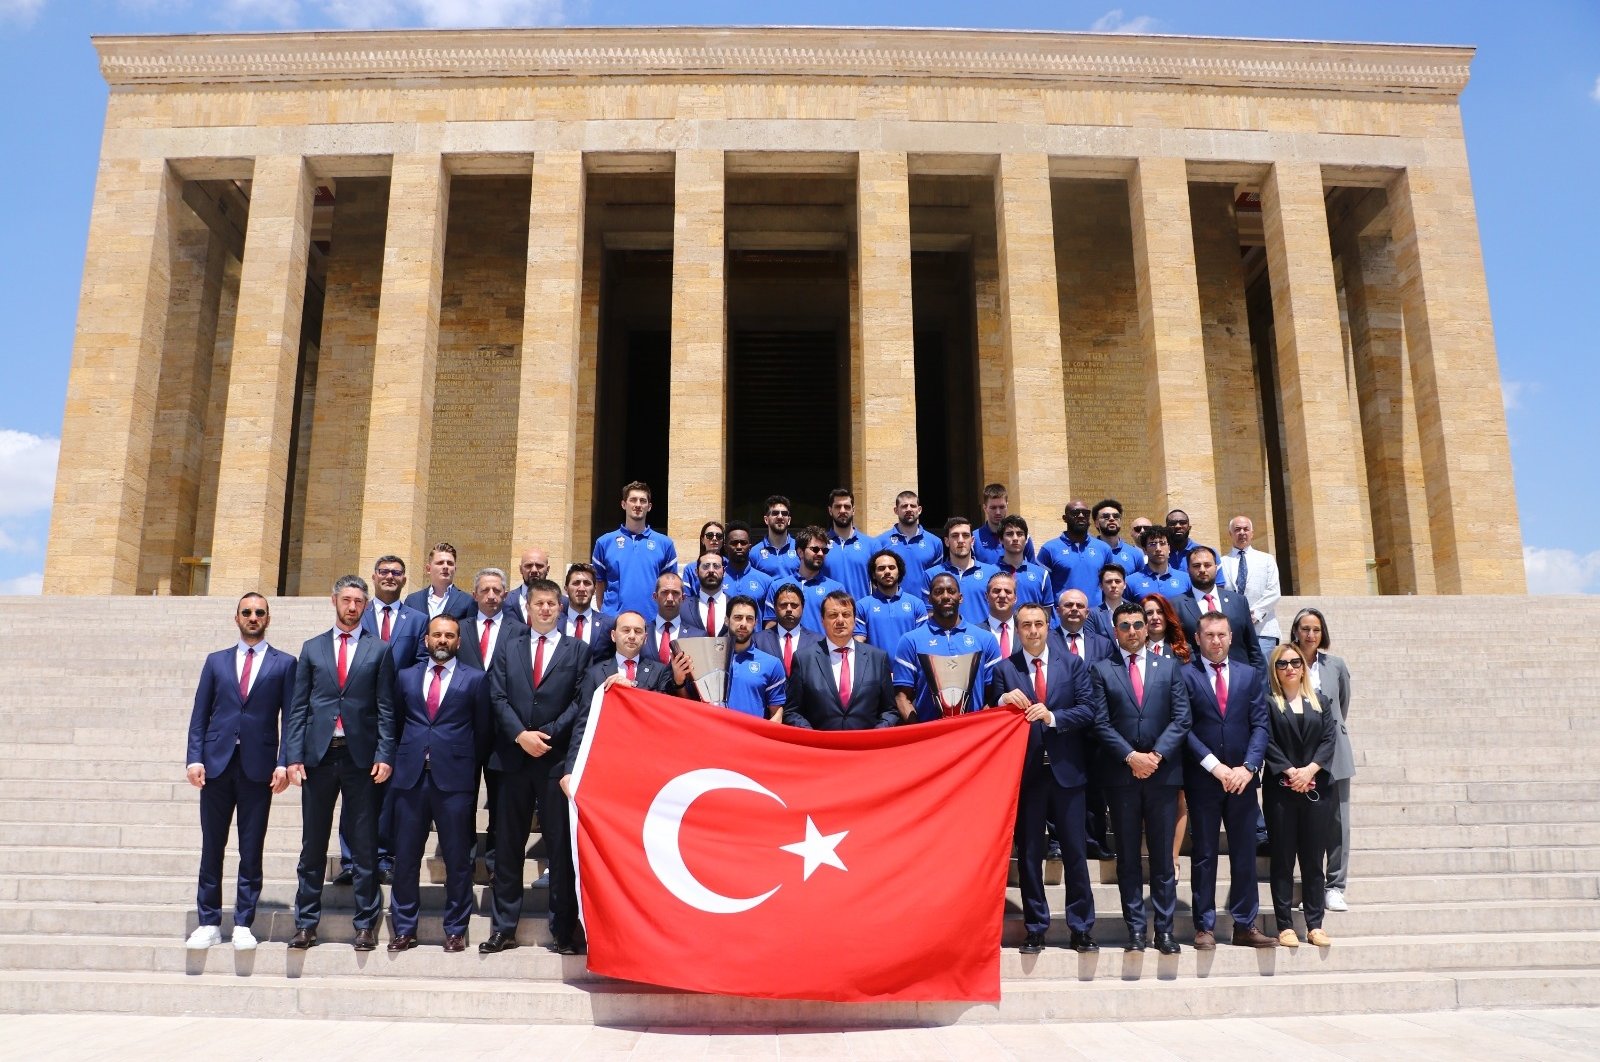 Juara Eropa Anadolu Efes mengunjungi makam Atatürk Anıtkabir